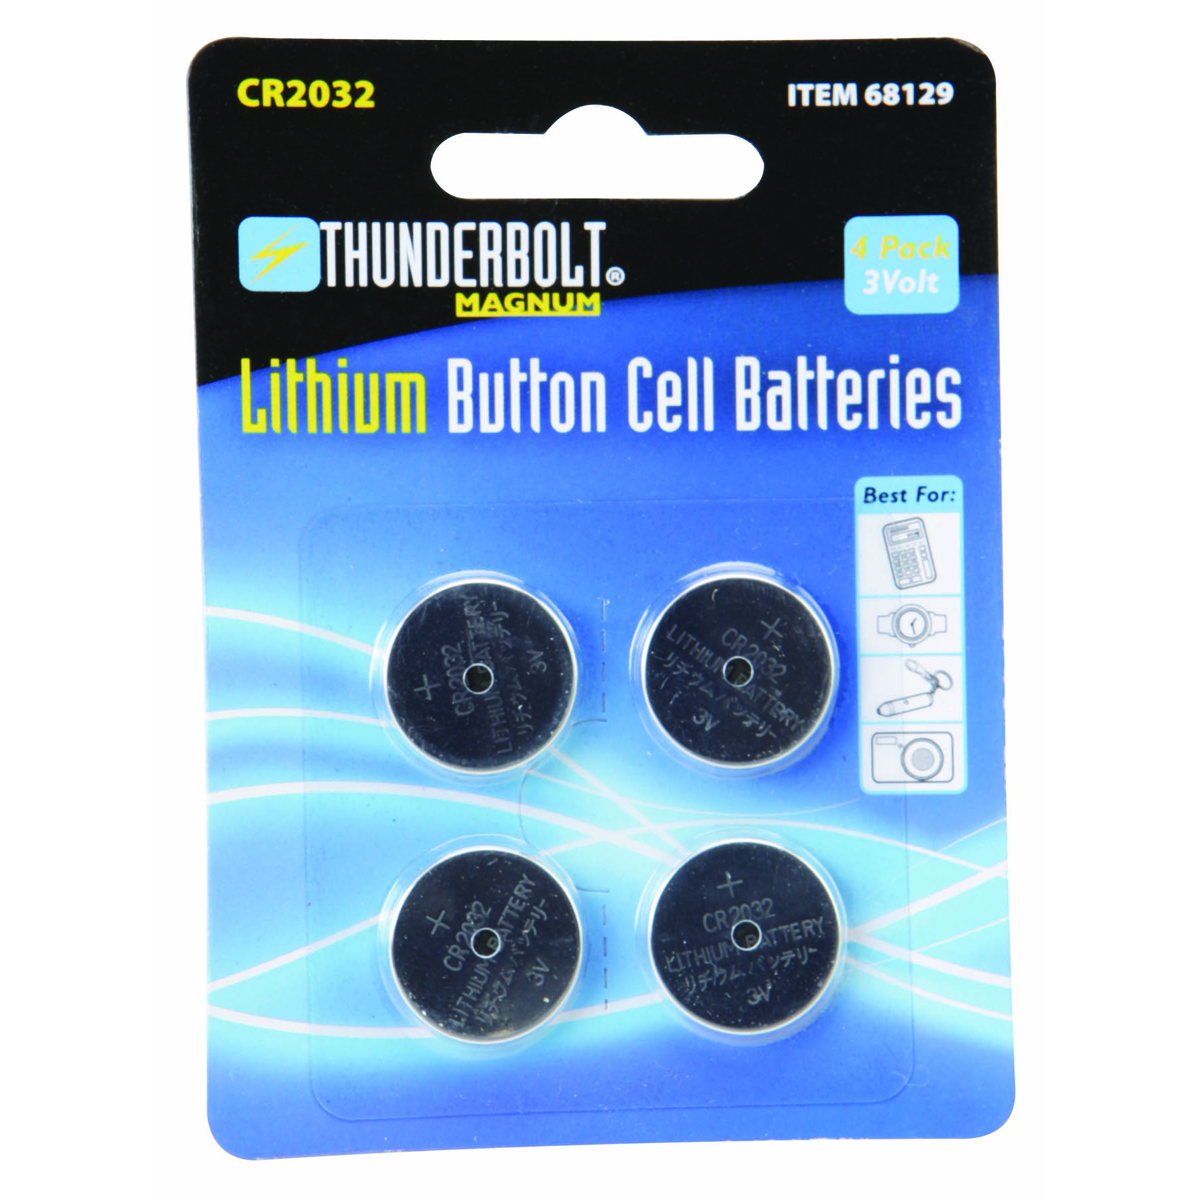 THUNDERBOLT CR2032 Lithium Button Cell Batteries 4 Pk. - Item 68129